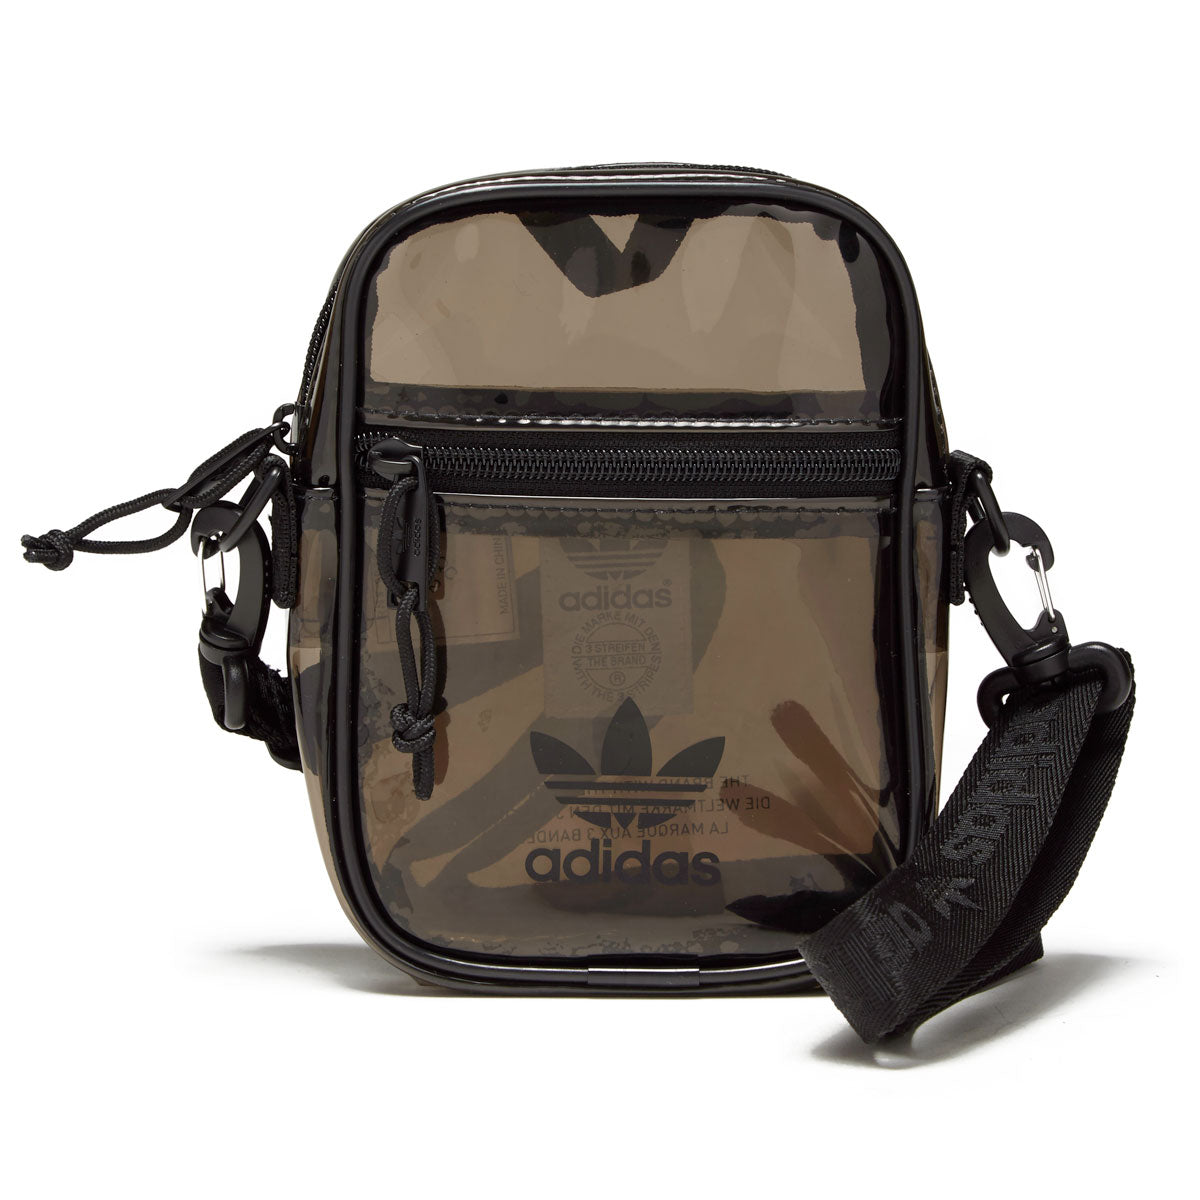 Adidas Originals Tinted Festival Crossbody
 Bag - Carbon Grey/Black image 1